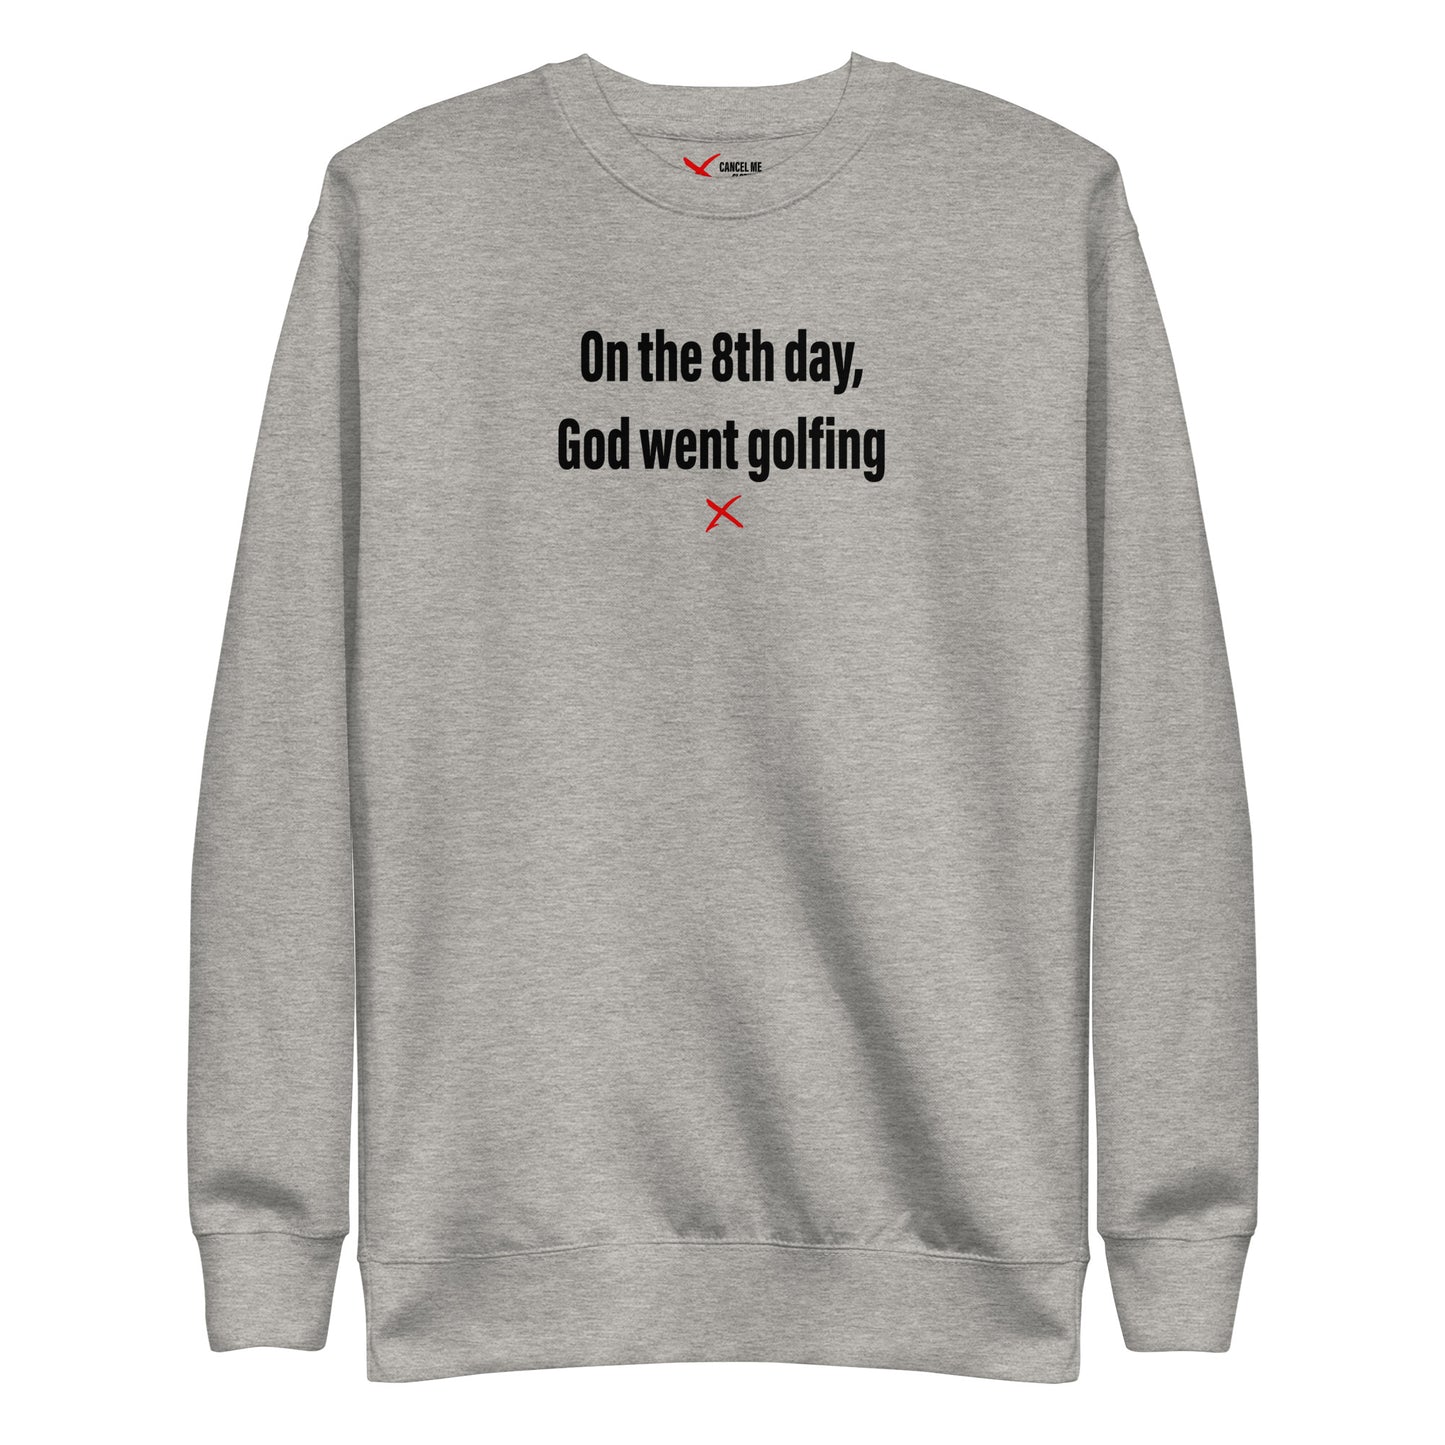 On the 8th day, God went golfing - Sweatshirt